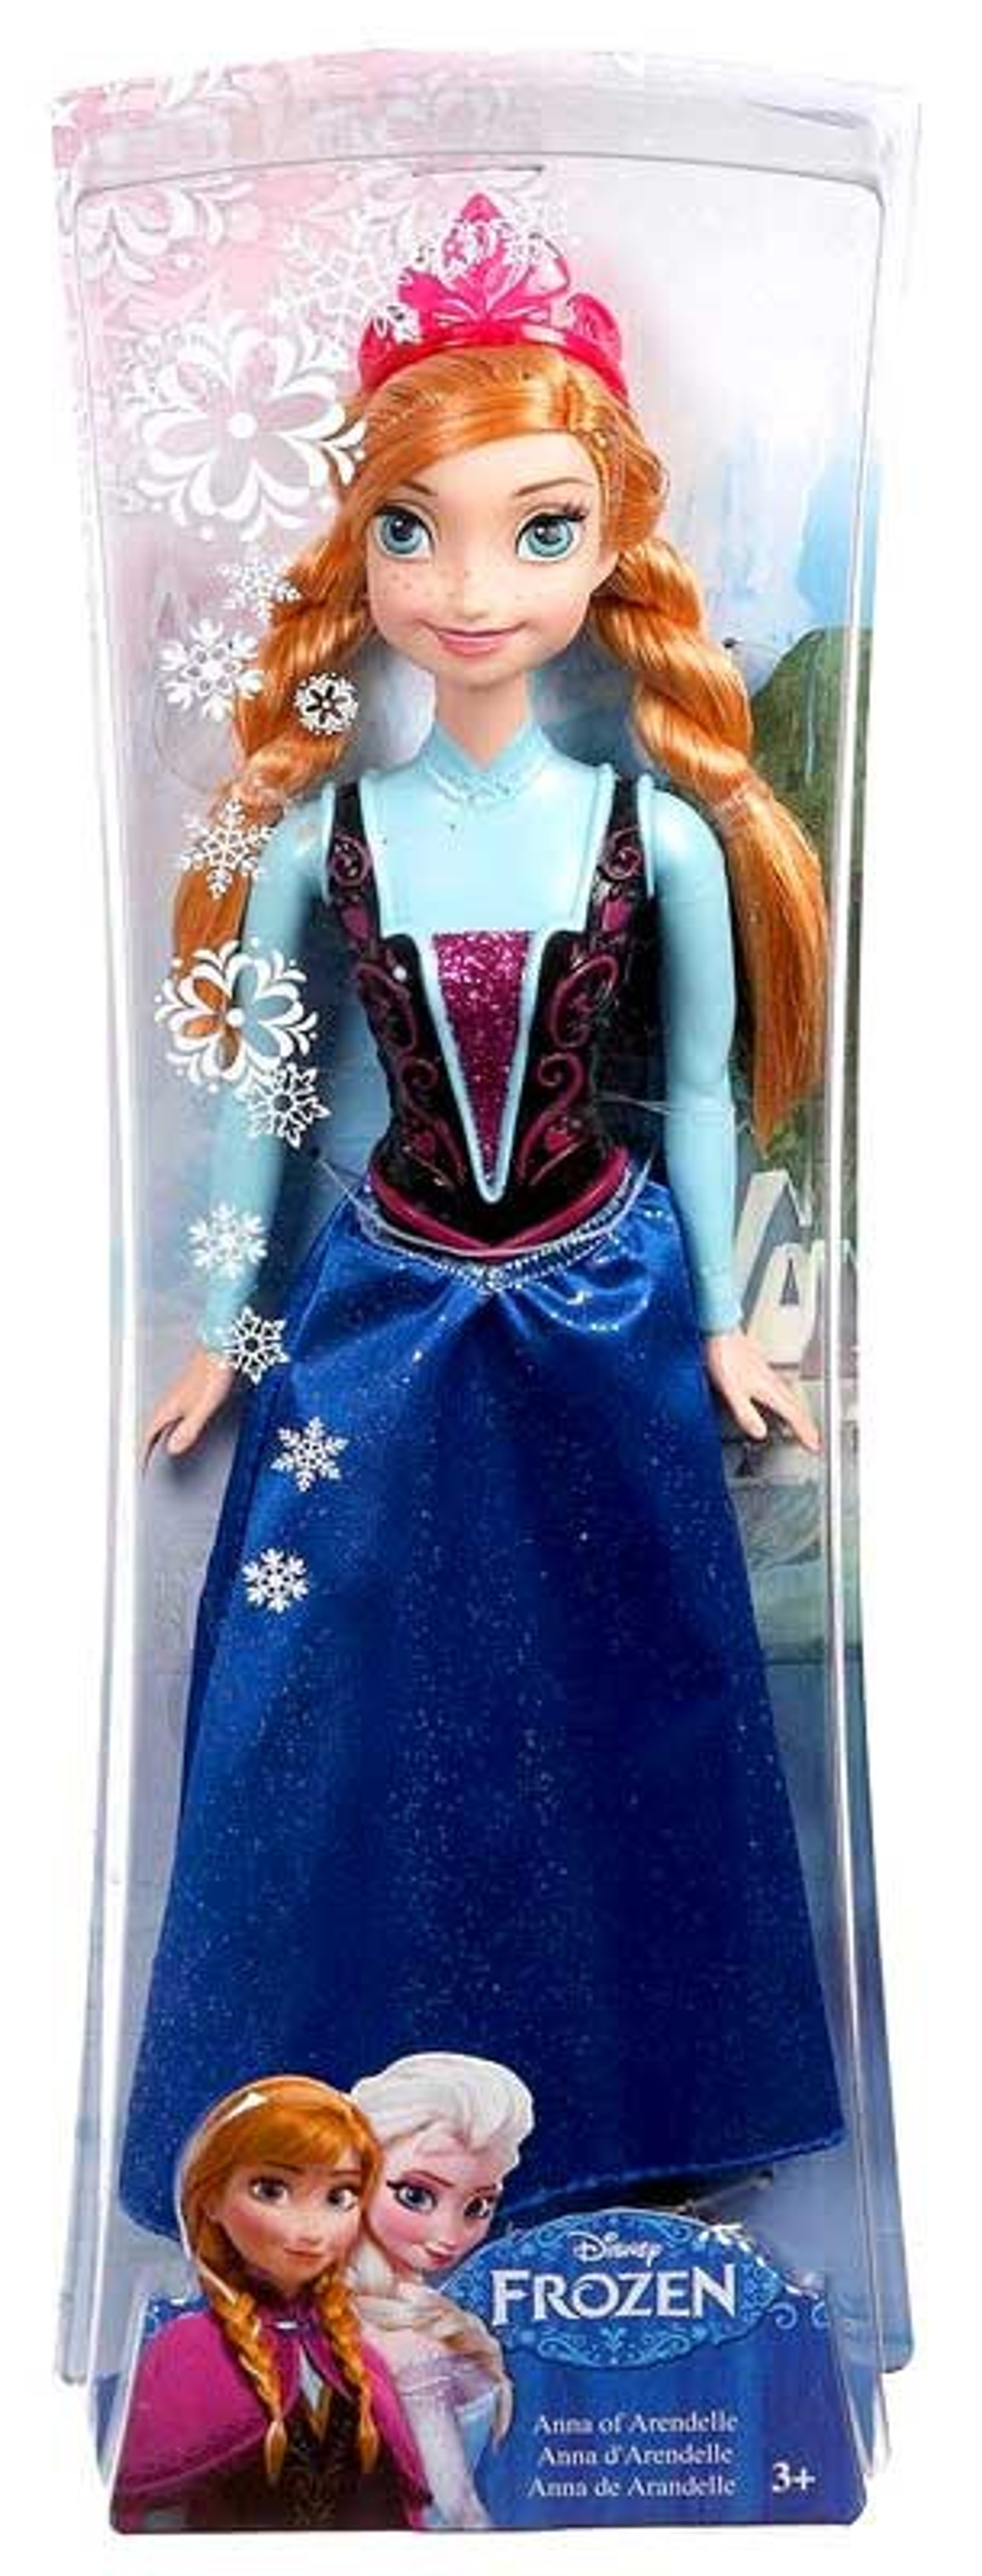 Disney Frozen Sparkle Princess Anna Of Arendelle 11 Doll Version 2 Mattel Toys Toywiz 5256